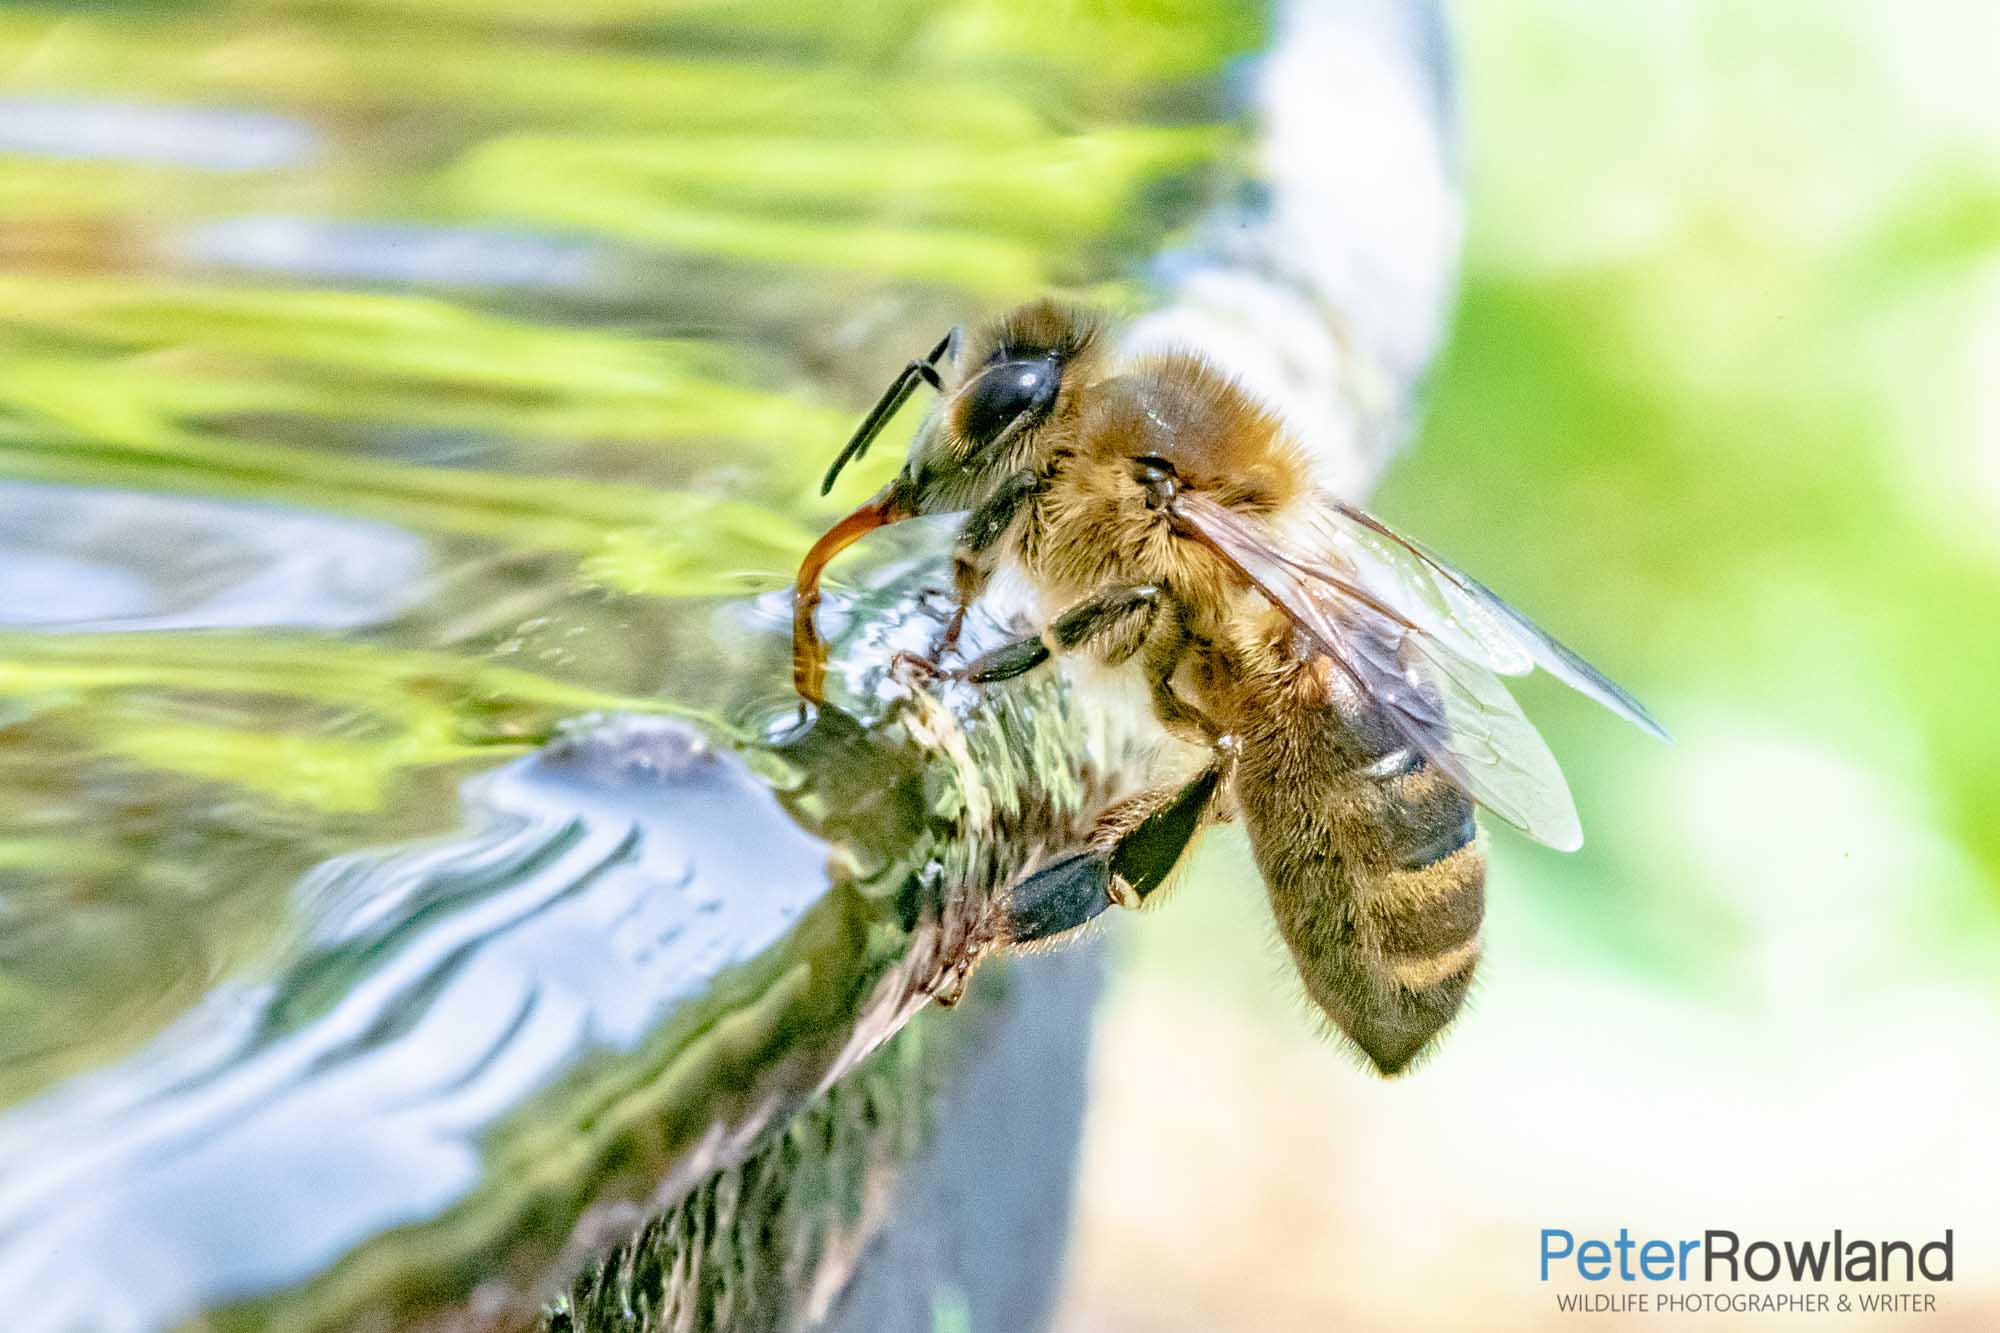 A European Honeybee drinking from a fountain